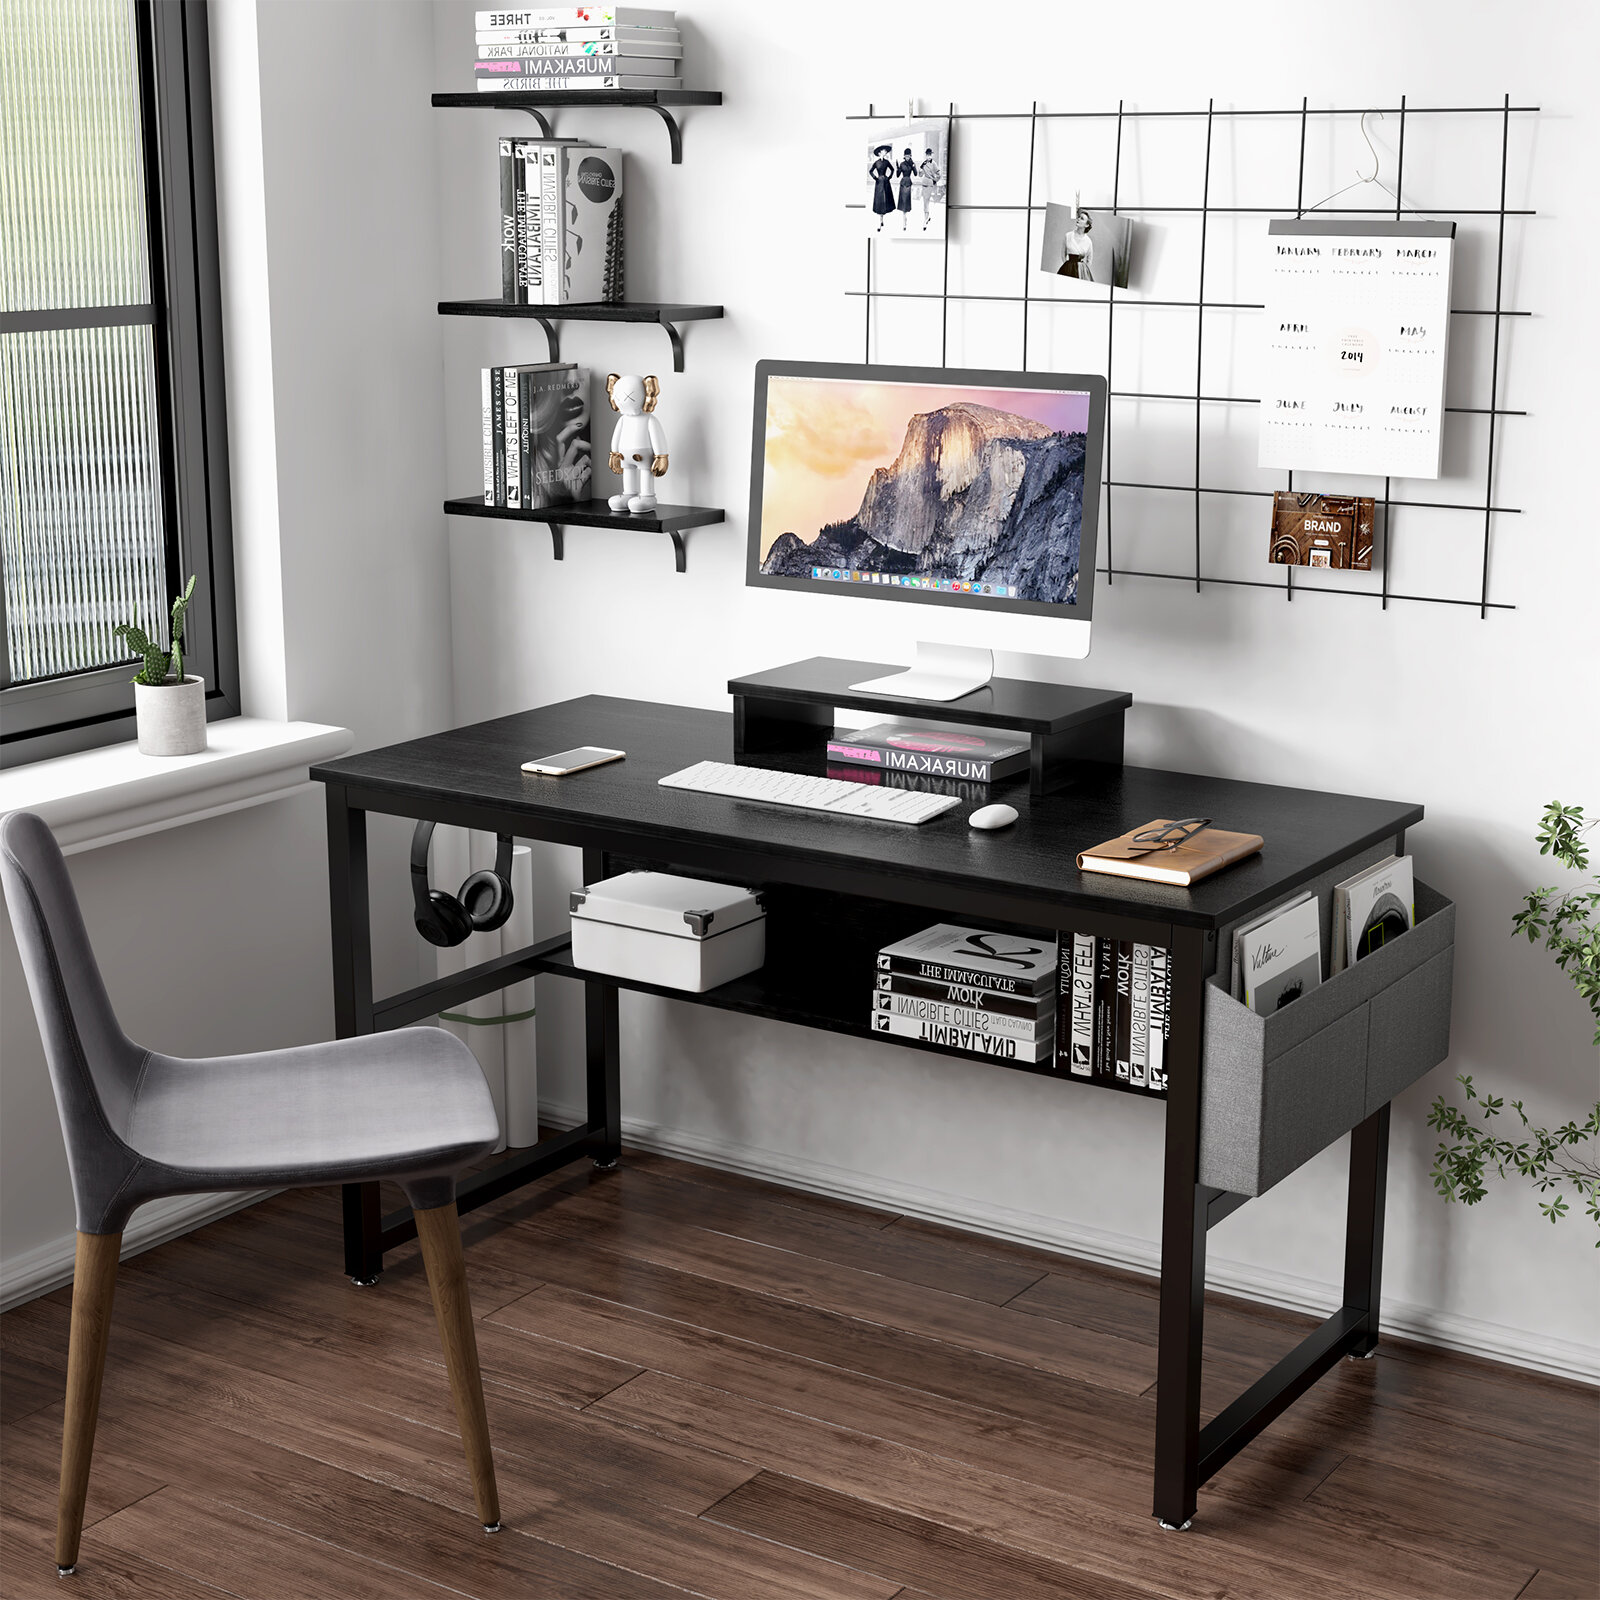 Study Writing Desk with Storage Bookshelf Home Office PC Laptop Table Workstation,Black Metal Frame & Desktop It's_Organized Ladder Desk,43 inch Computer Desk with Hutch